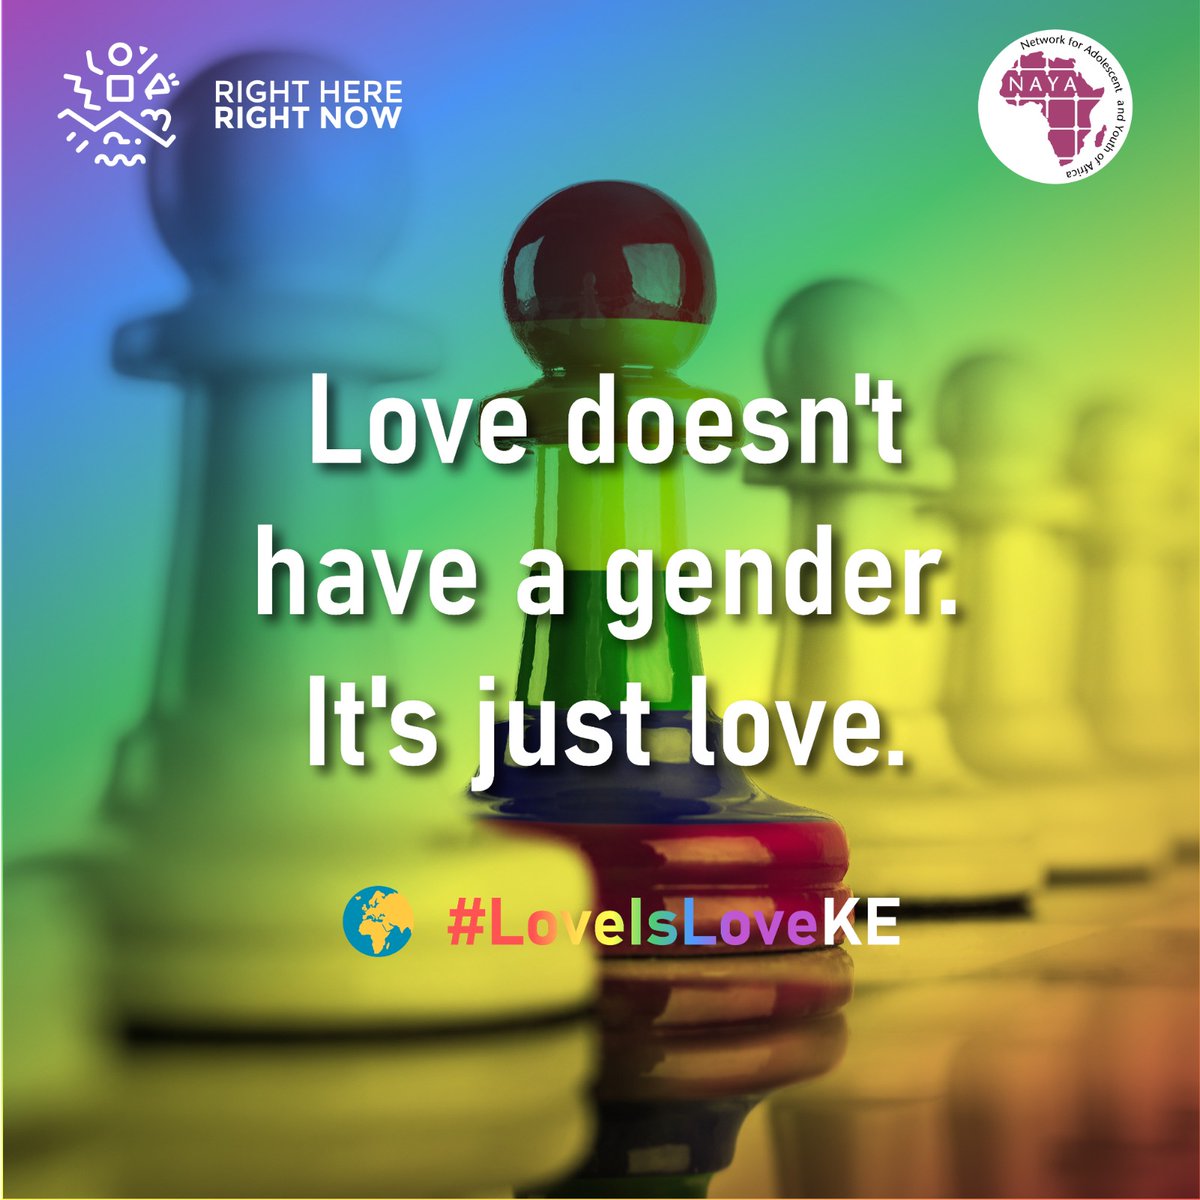 #LoveIsLoveKE let's love and respect each other's opinions.
#IDAHOBIT
@NAYAKenya
@RHRNKenya
@CSA_Kenya